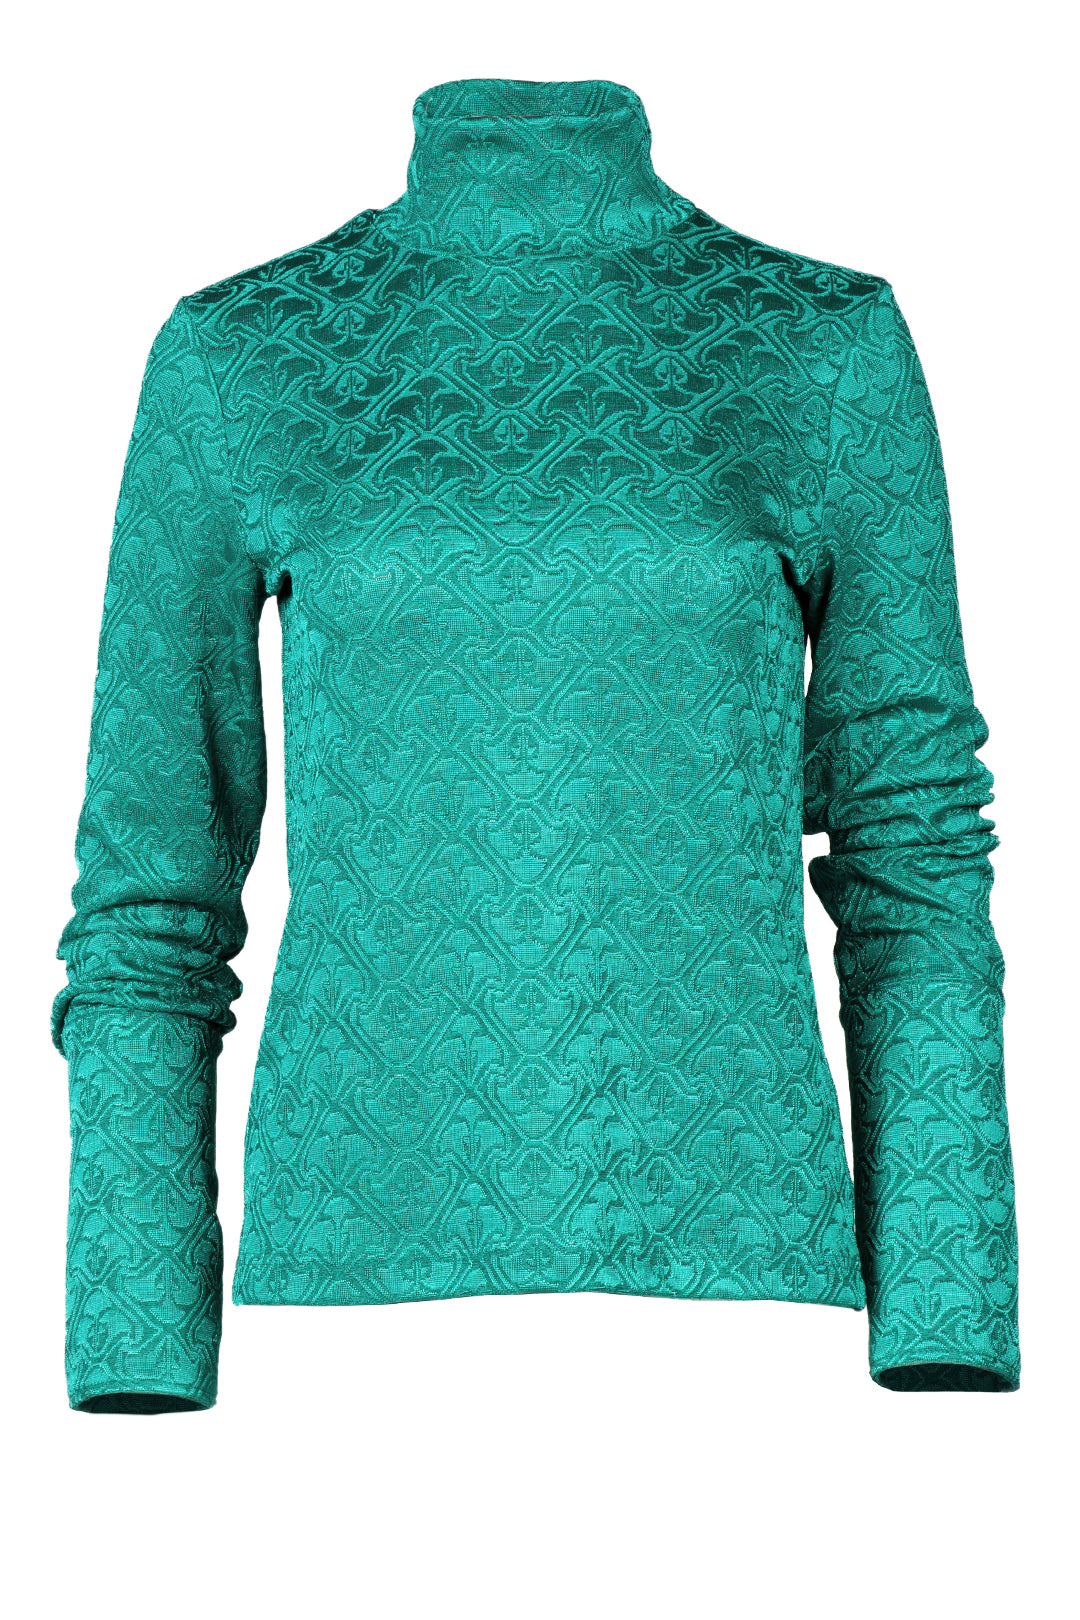 Turquoise turtleneck sweater | Kane